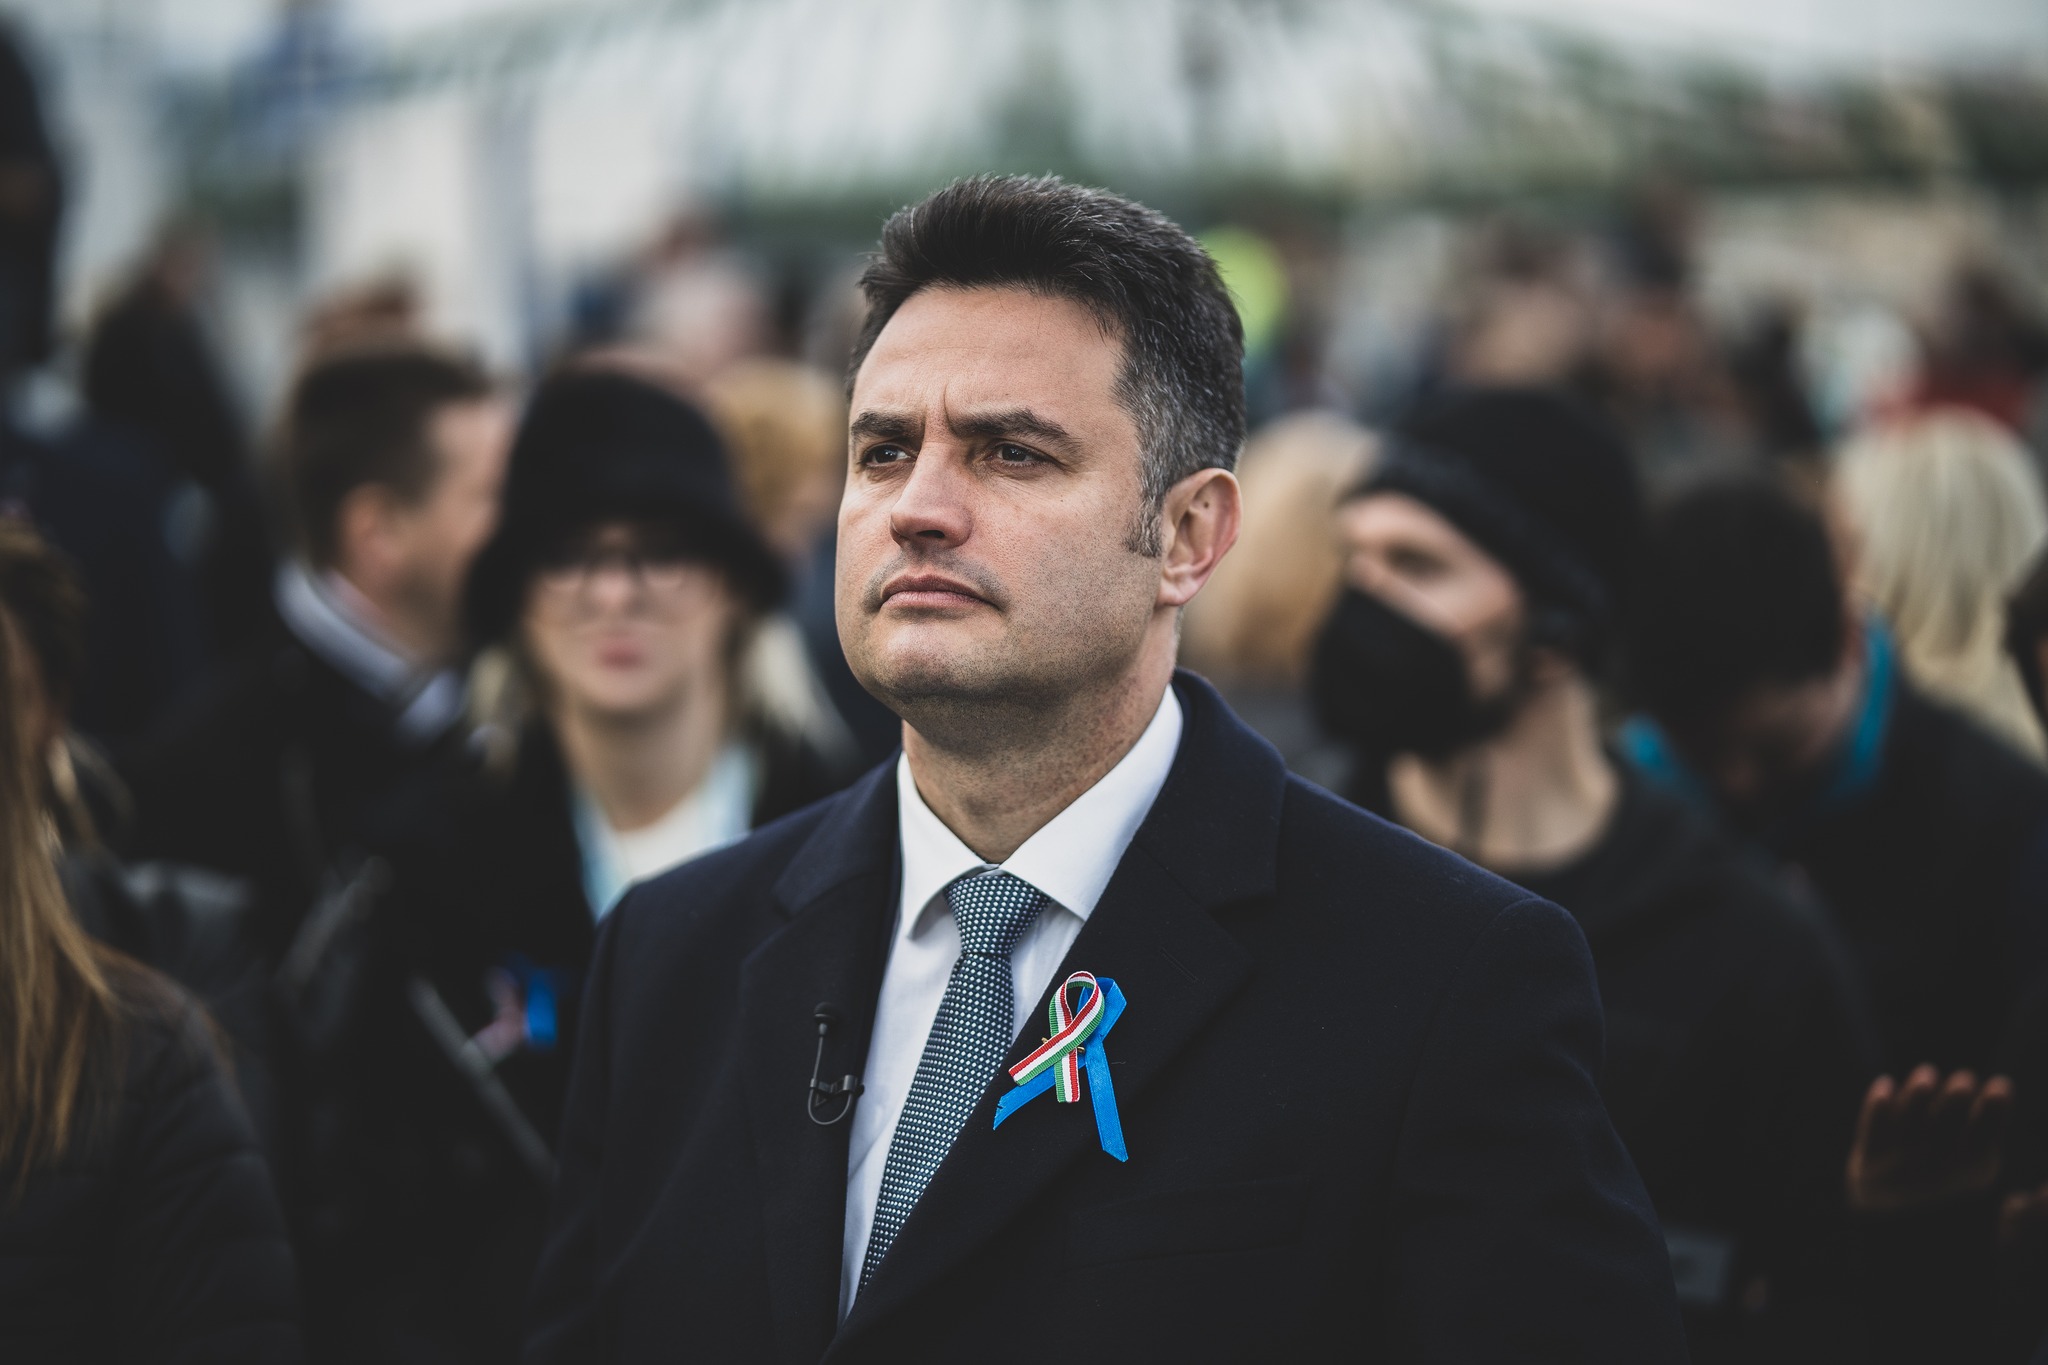 Ukrainian War: Opposition PM Candidate Márki-Zay Files Criminal Complaint over Fidesz's Accusations